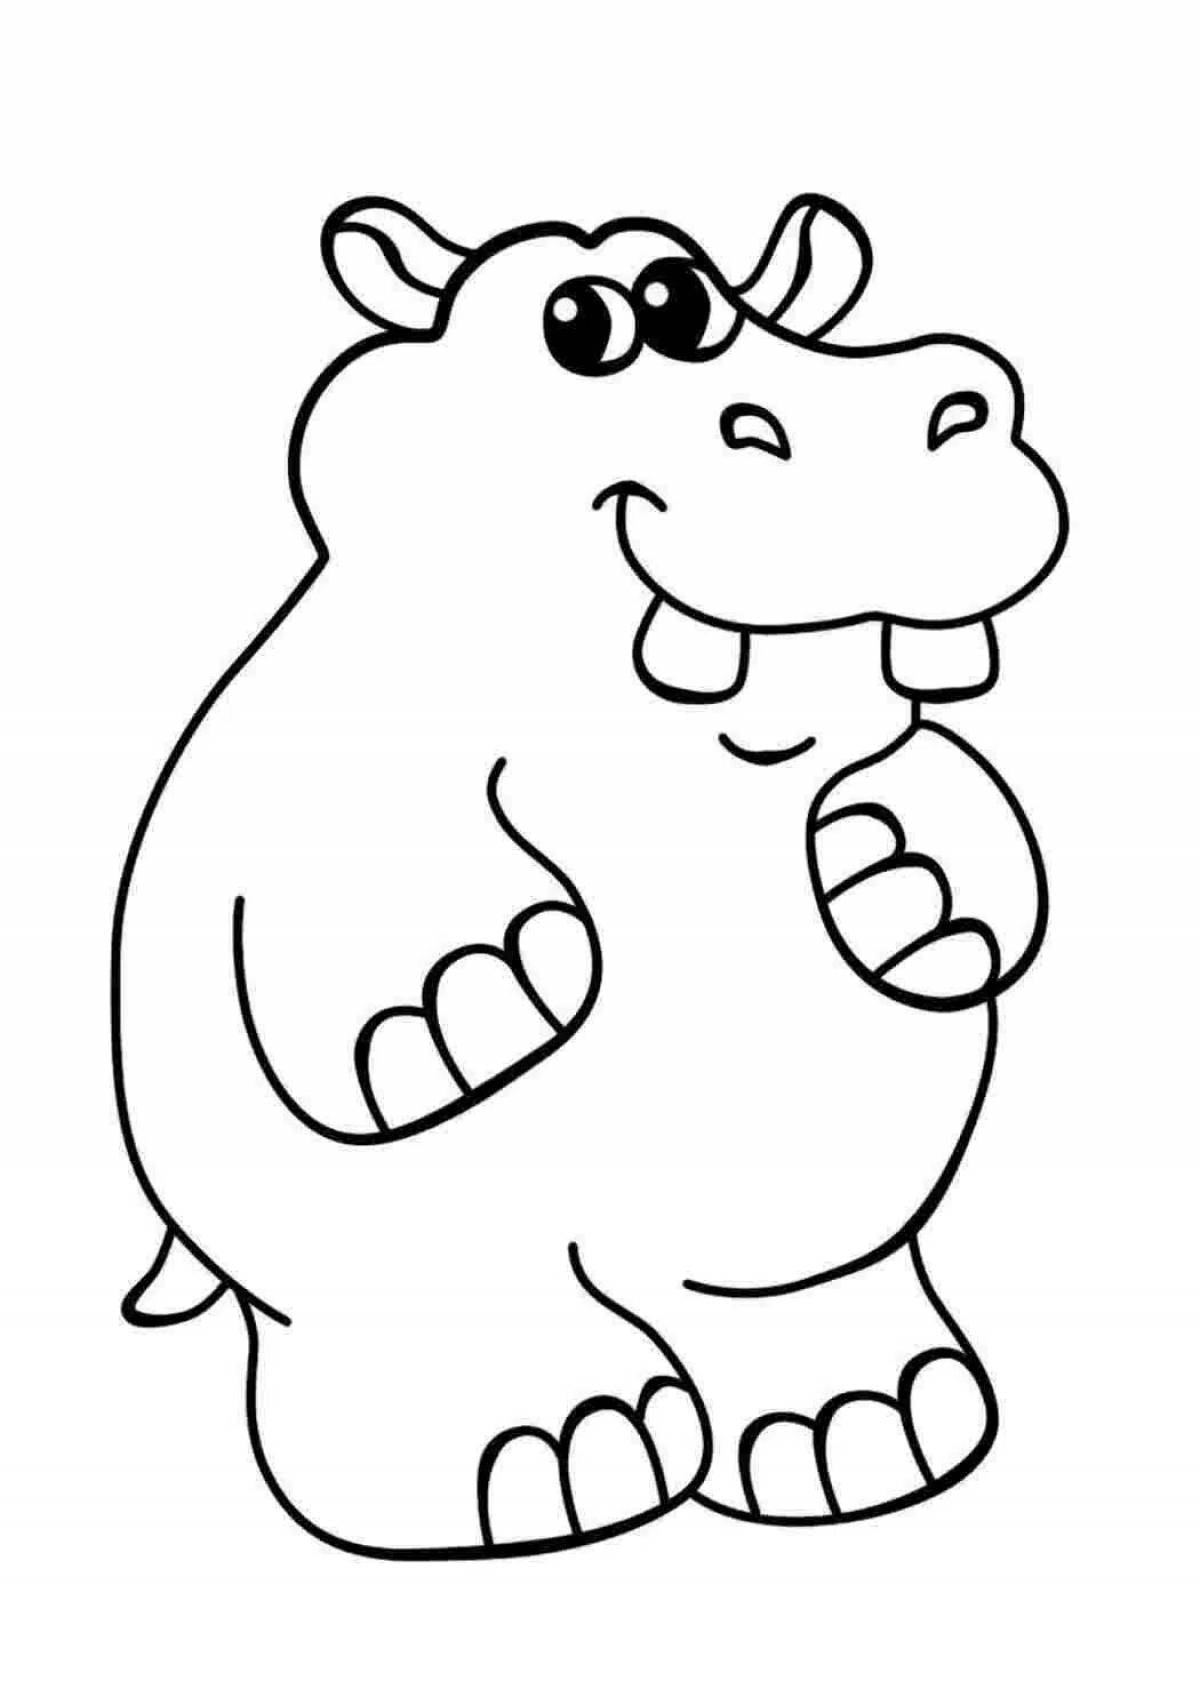 Joyful hippo coloring for kids